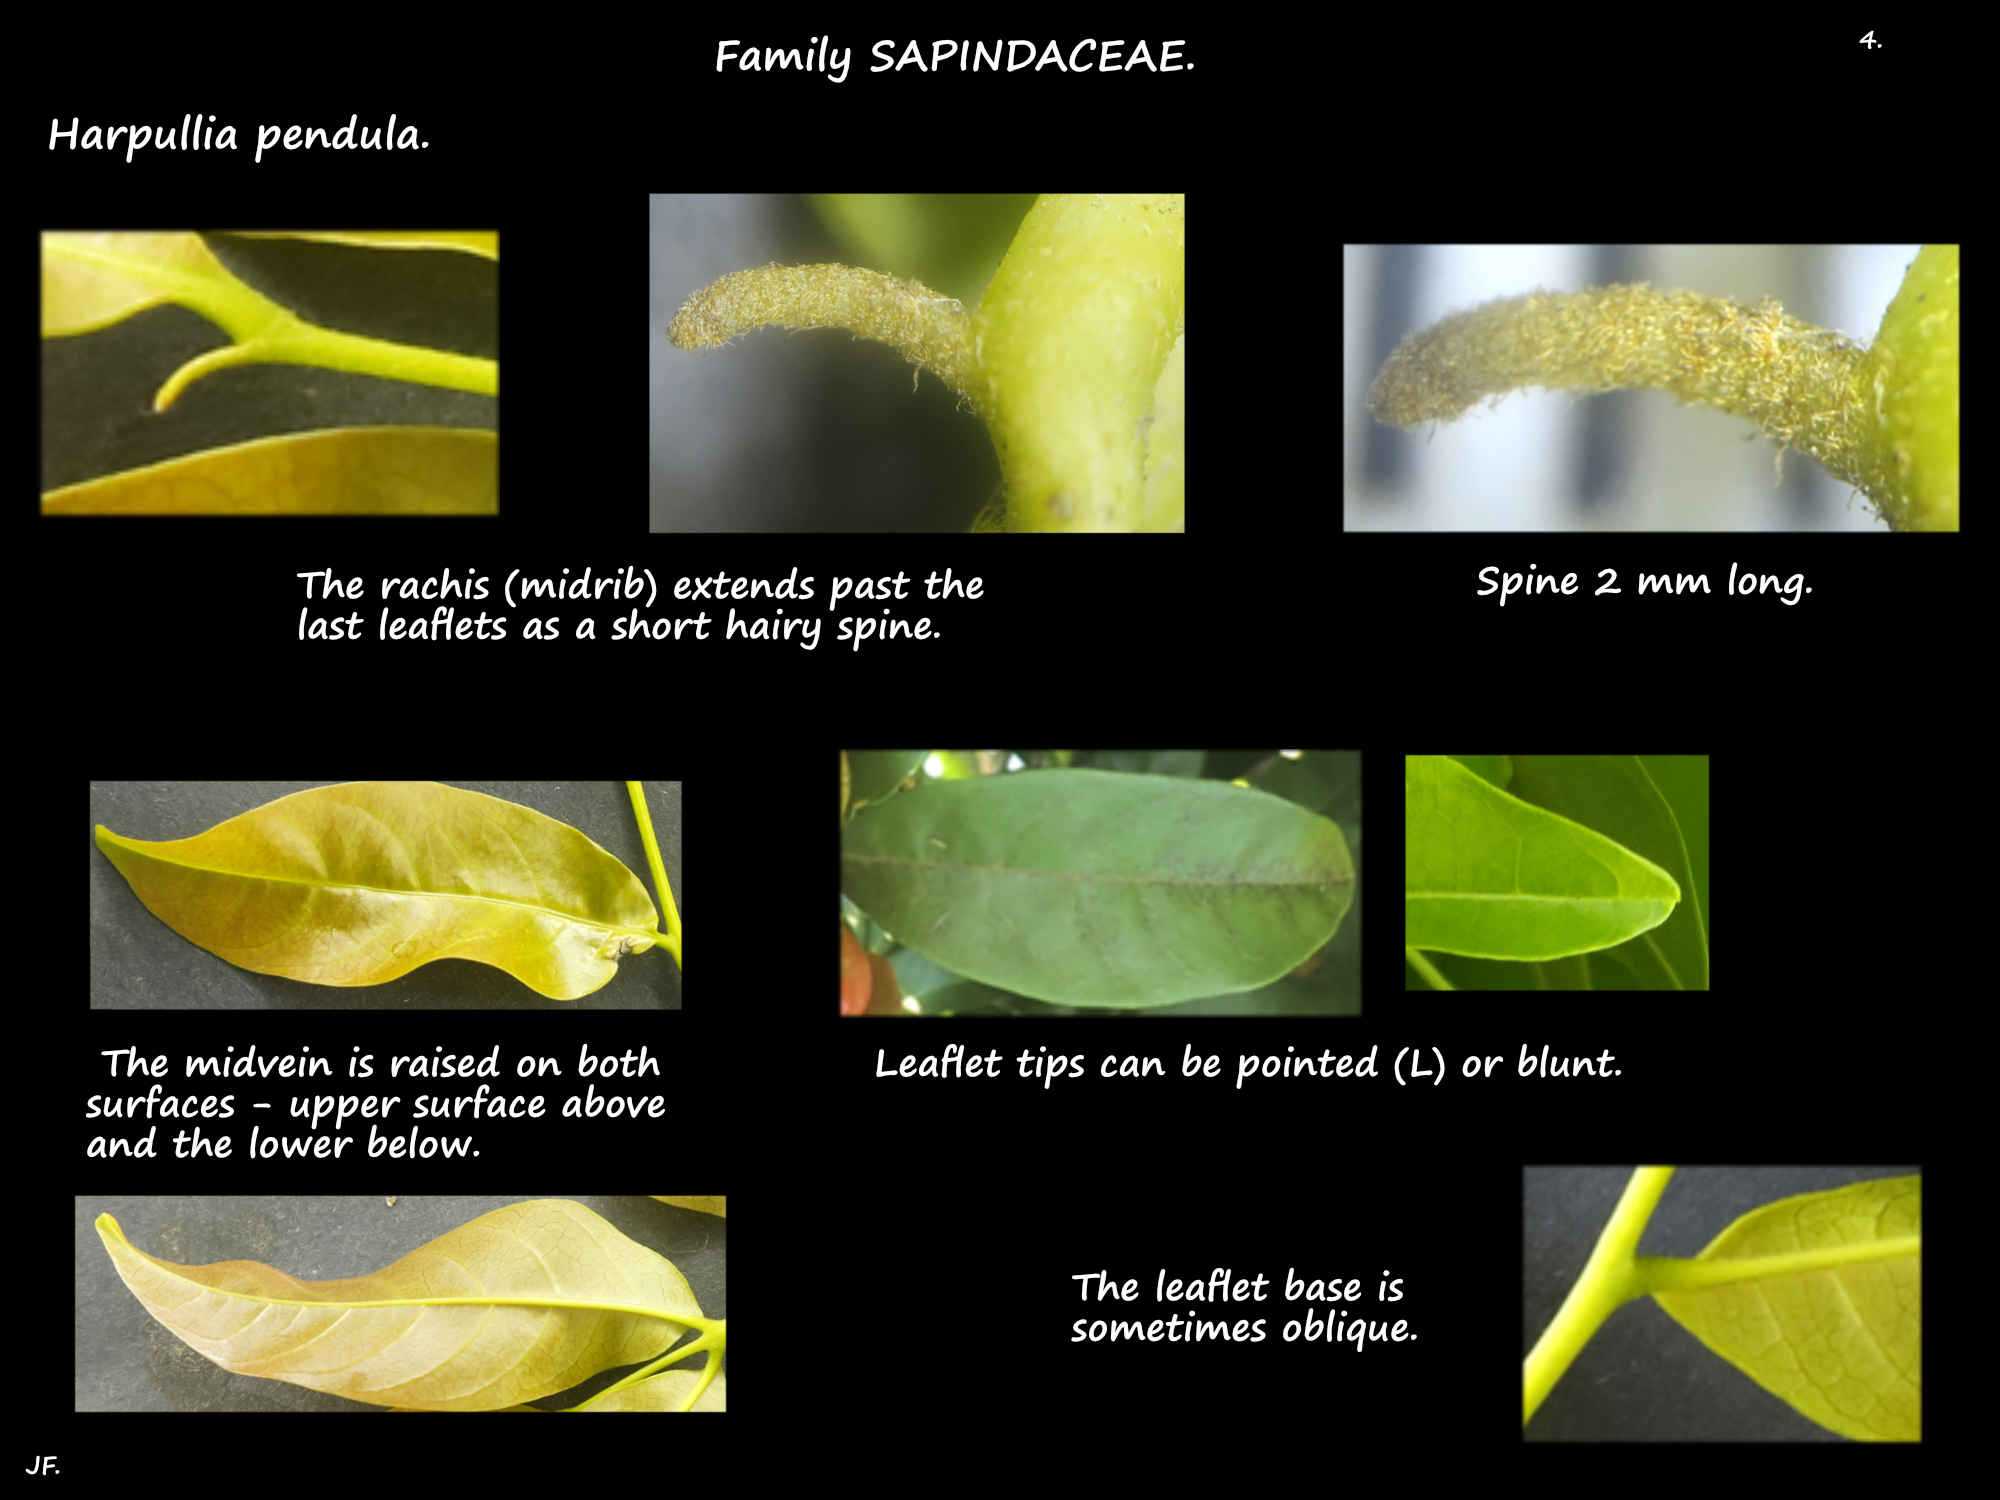 4 The rachis spine & the leaflets of Harpullia pendula